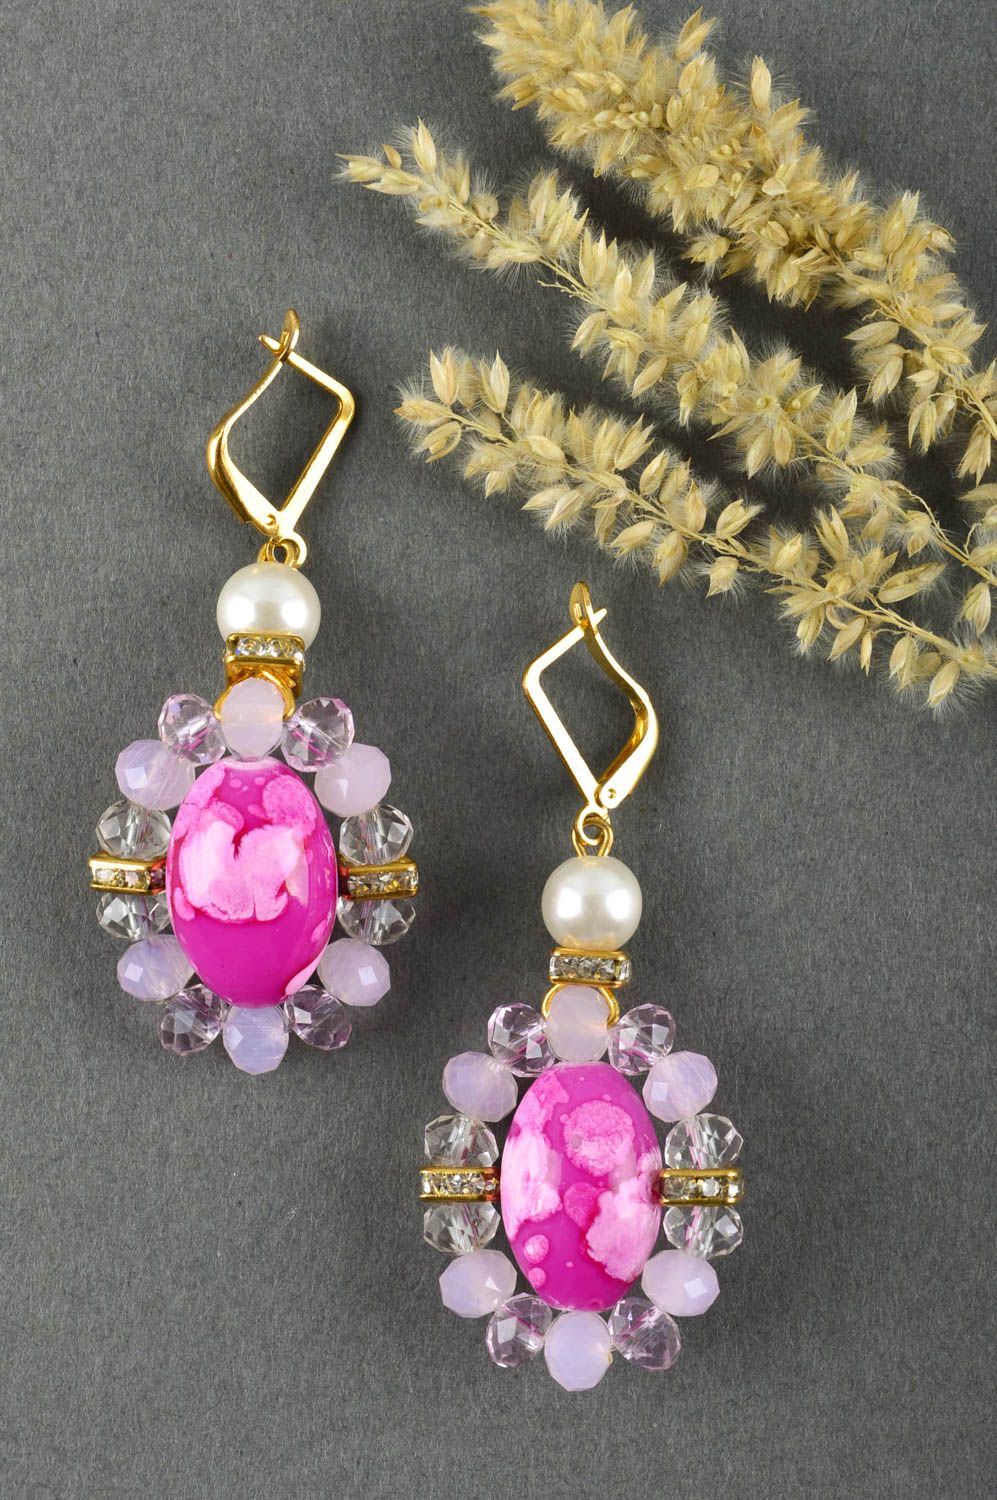 Homemade jewelry earrings for ladies cute earrings designer accessories photo 1